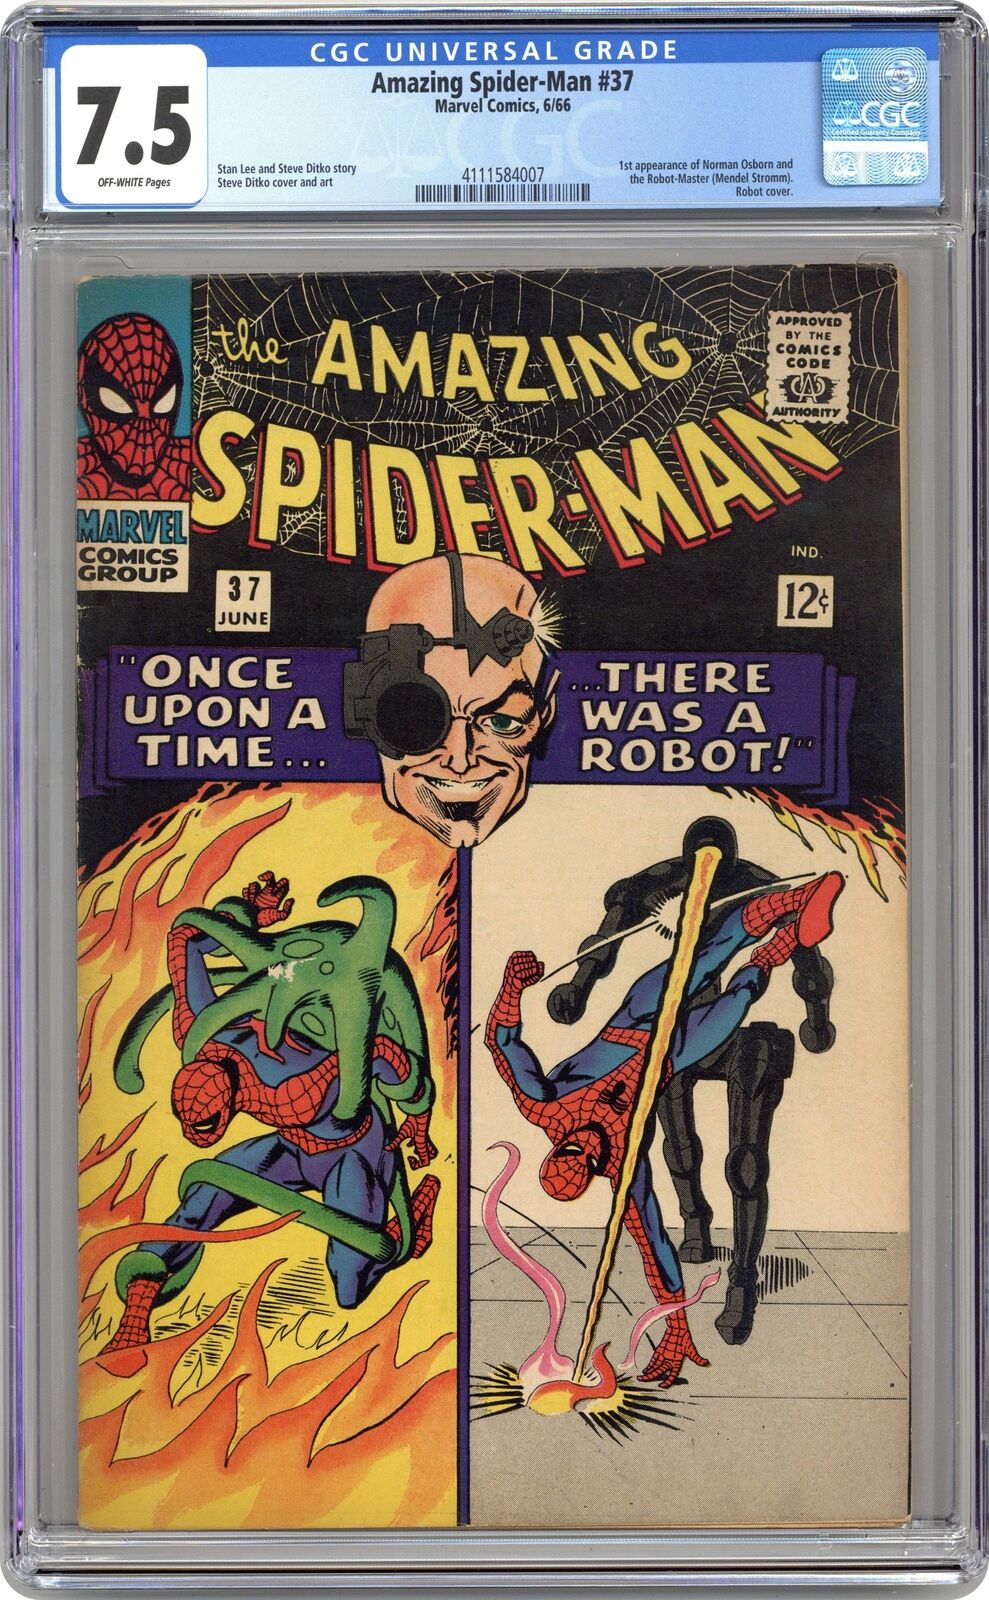 Amazing Spider-Man #37 CGC 7.5 1966 4111584007 1st app. Norman Osborn